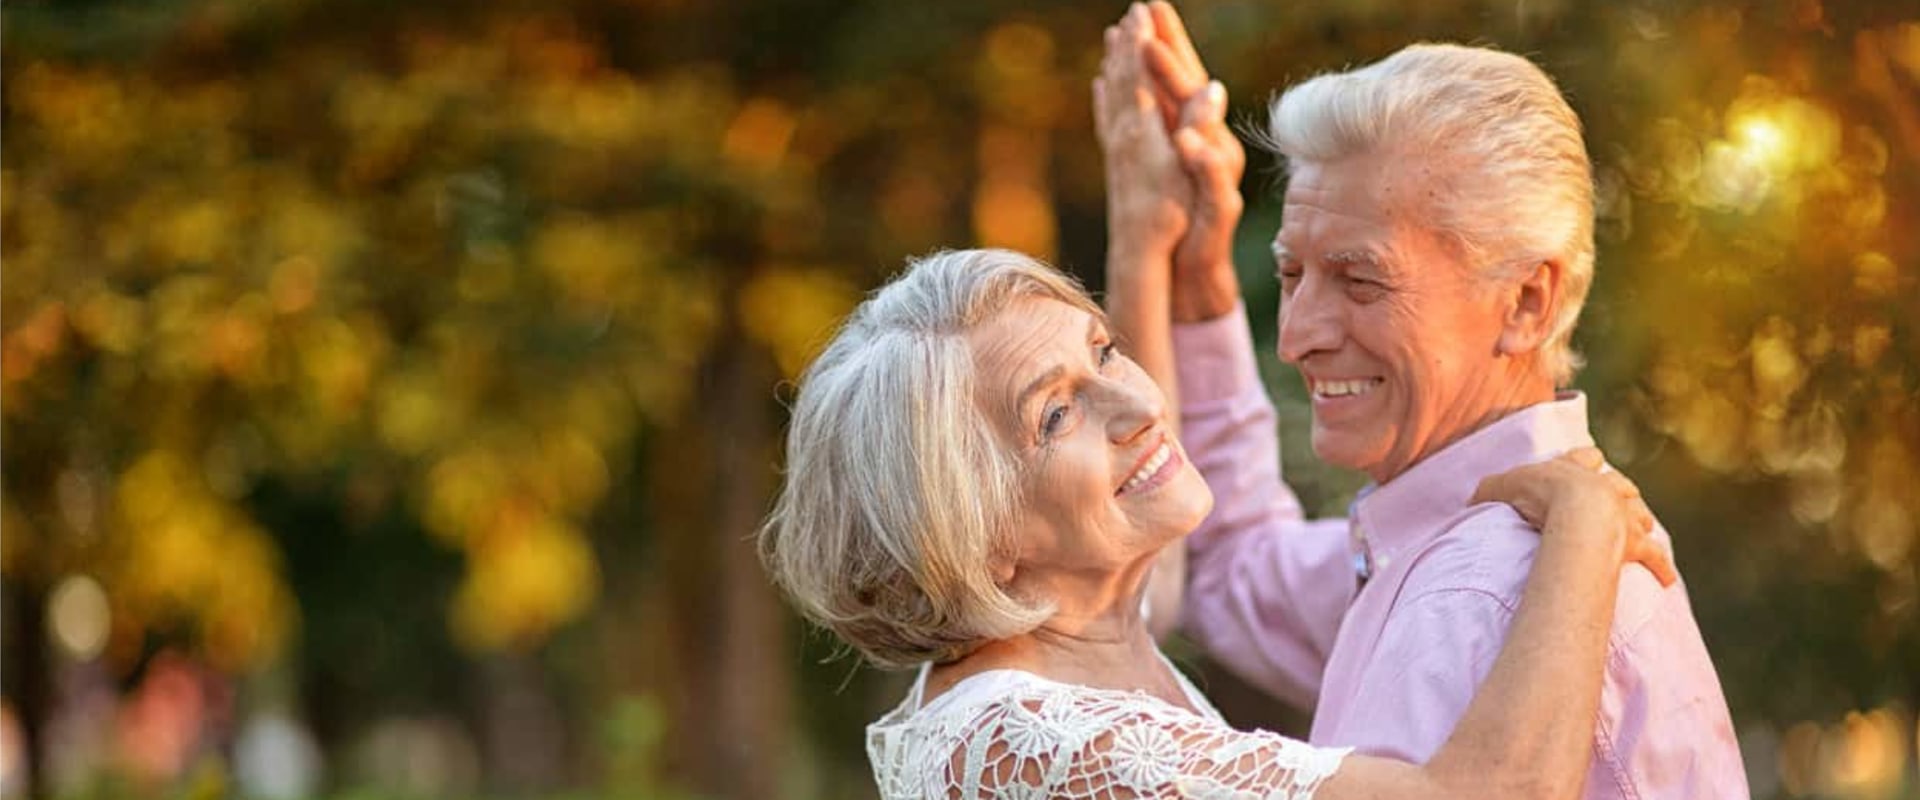 A Detailed Look at Popular Senior Dating Platforms